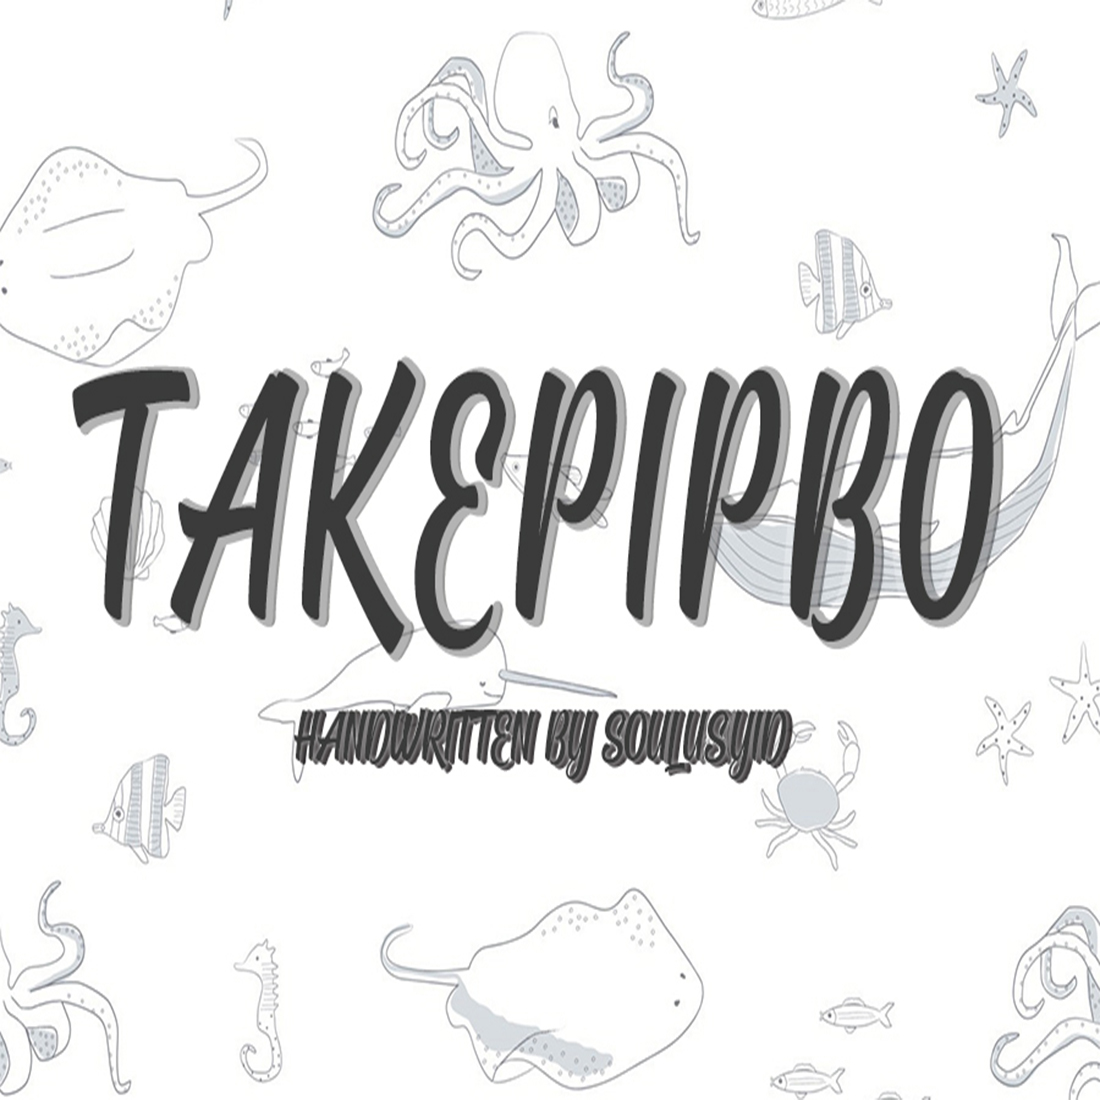 Takepipbo cover image.